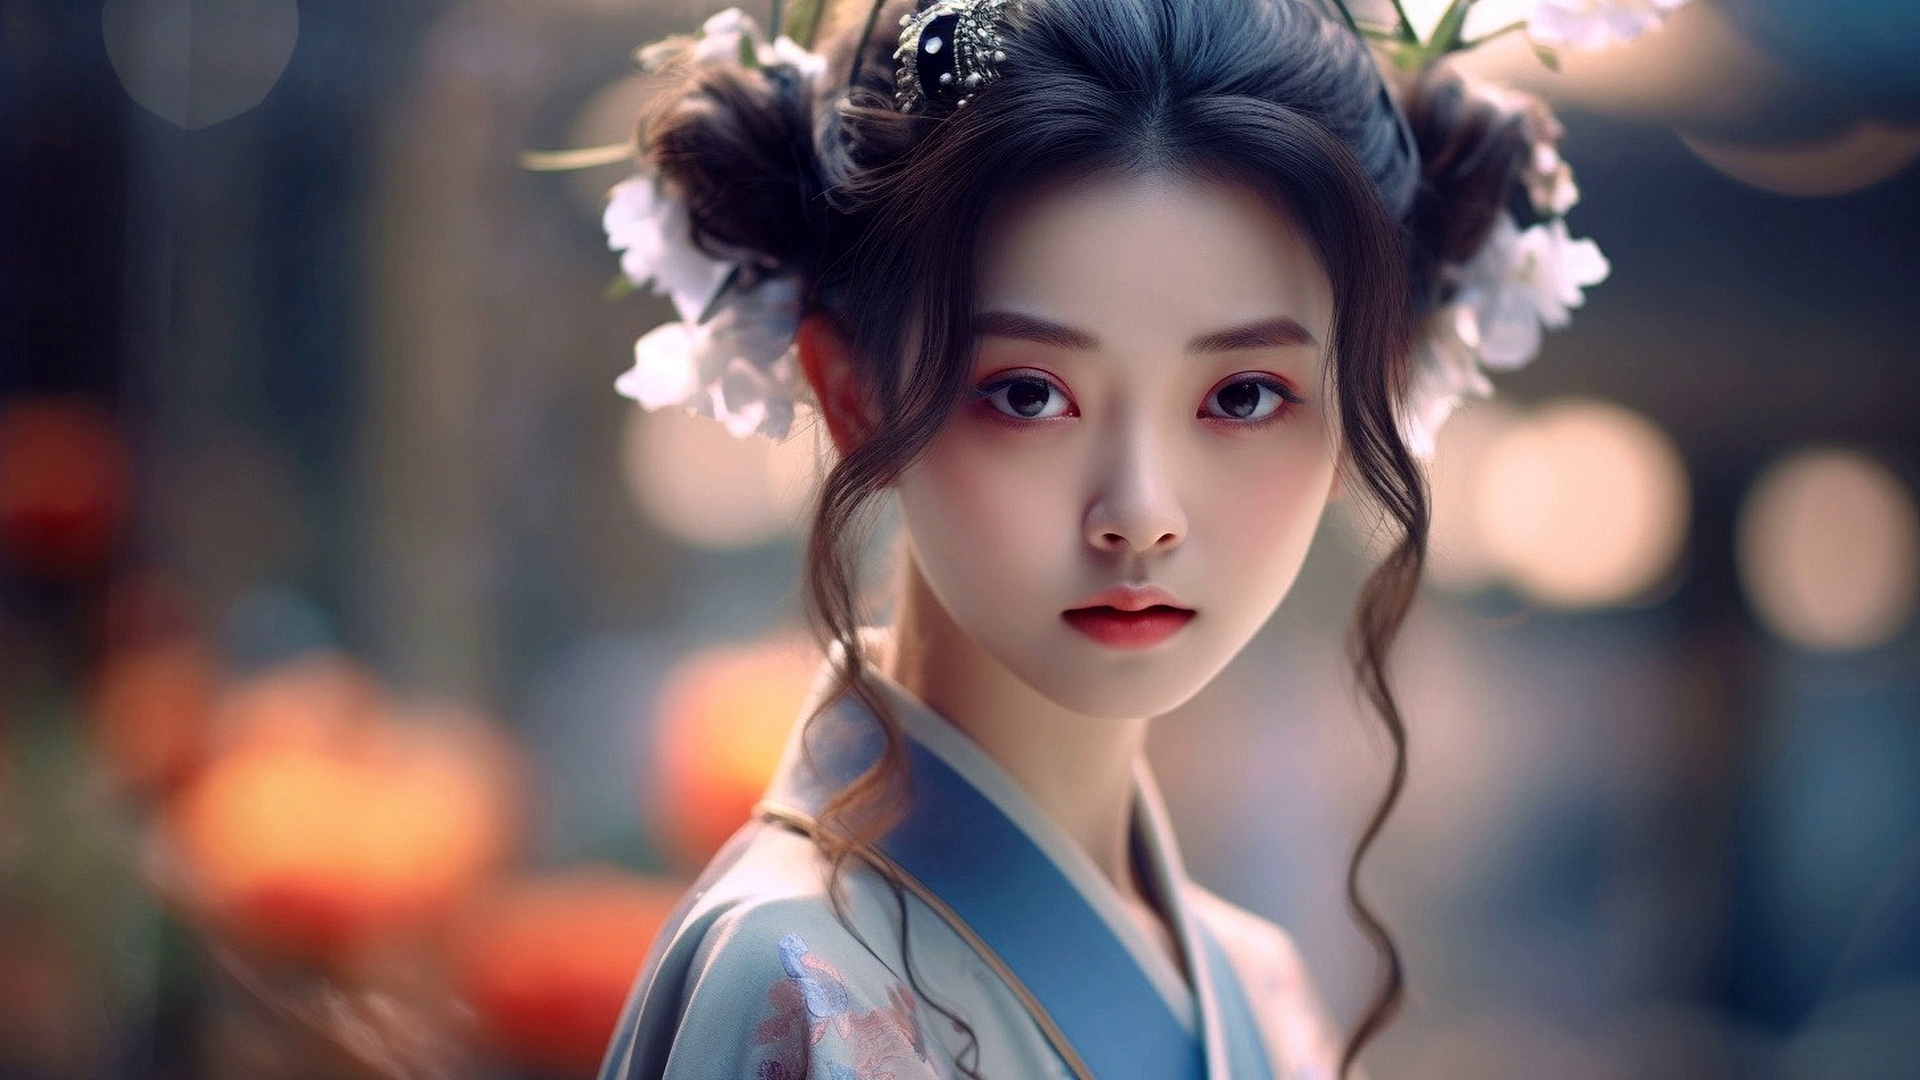 Free photo Portrait of an Asian girl in a kimono